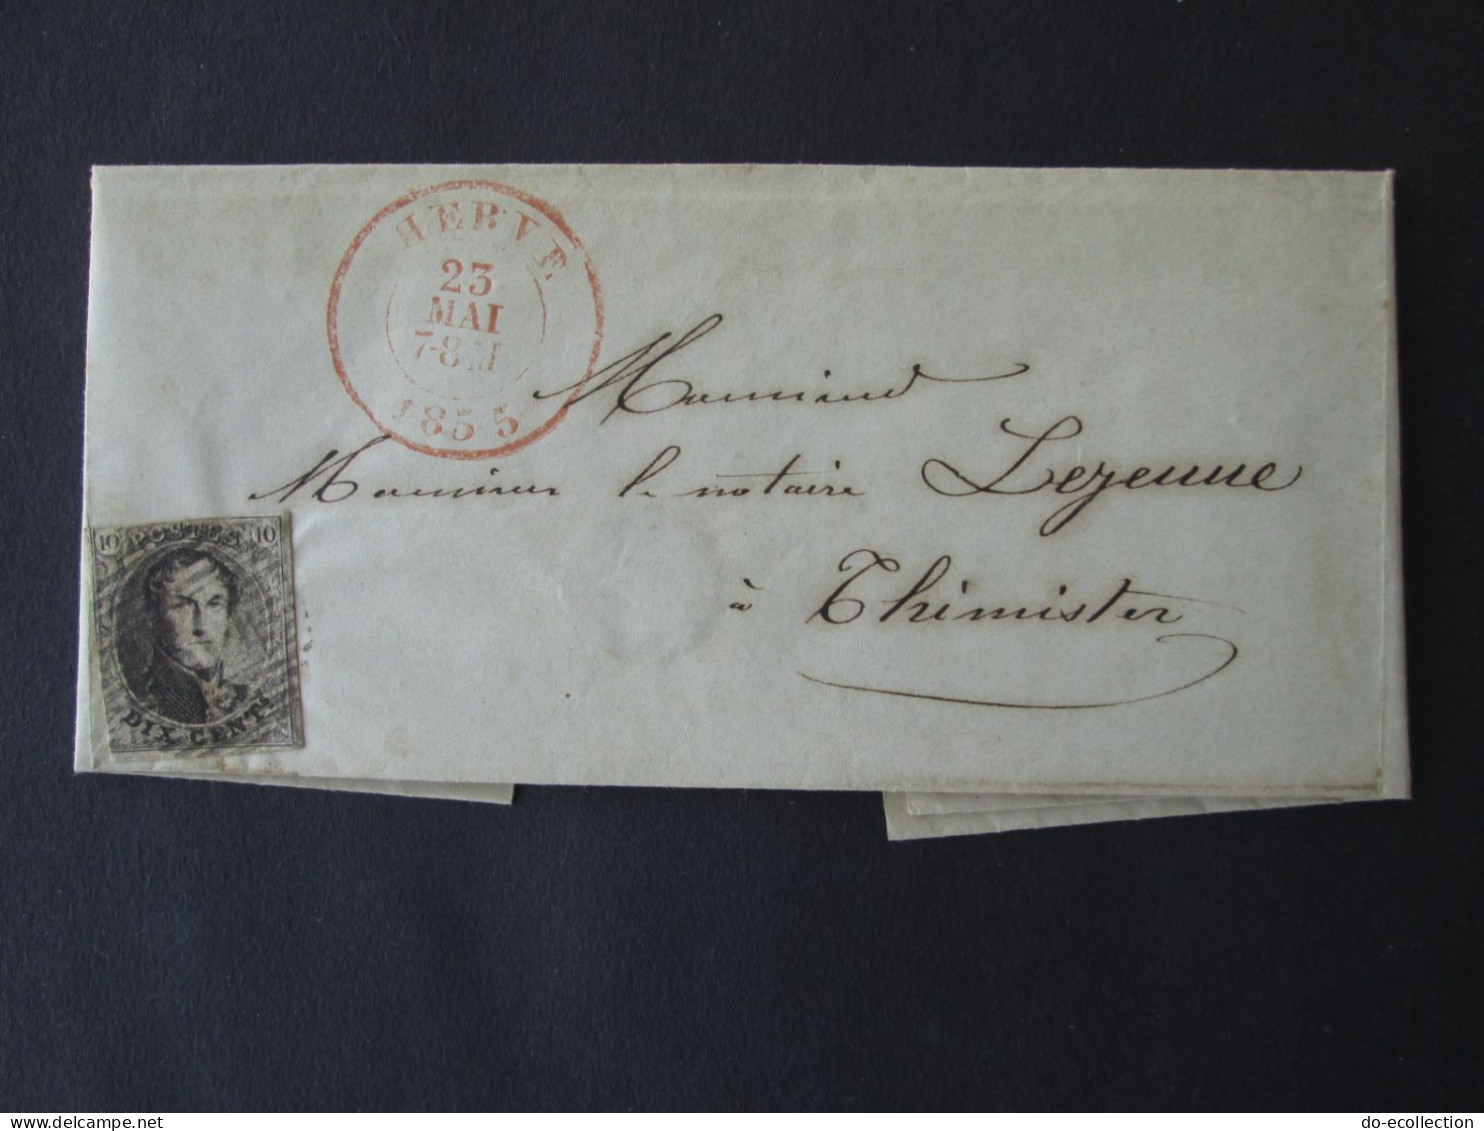 BELGIQUE Lettre 1855 HERVE Vers THIMISTER Timbre Leopold I 10c Belgie Belgium Timbre Stamp - 1851-1857 Medallones (6/8)